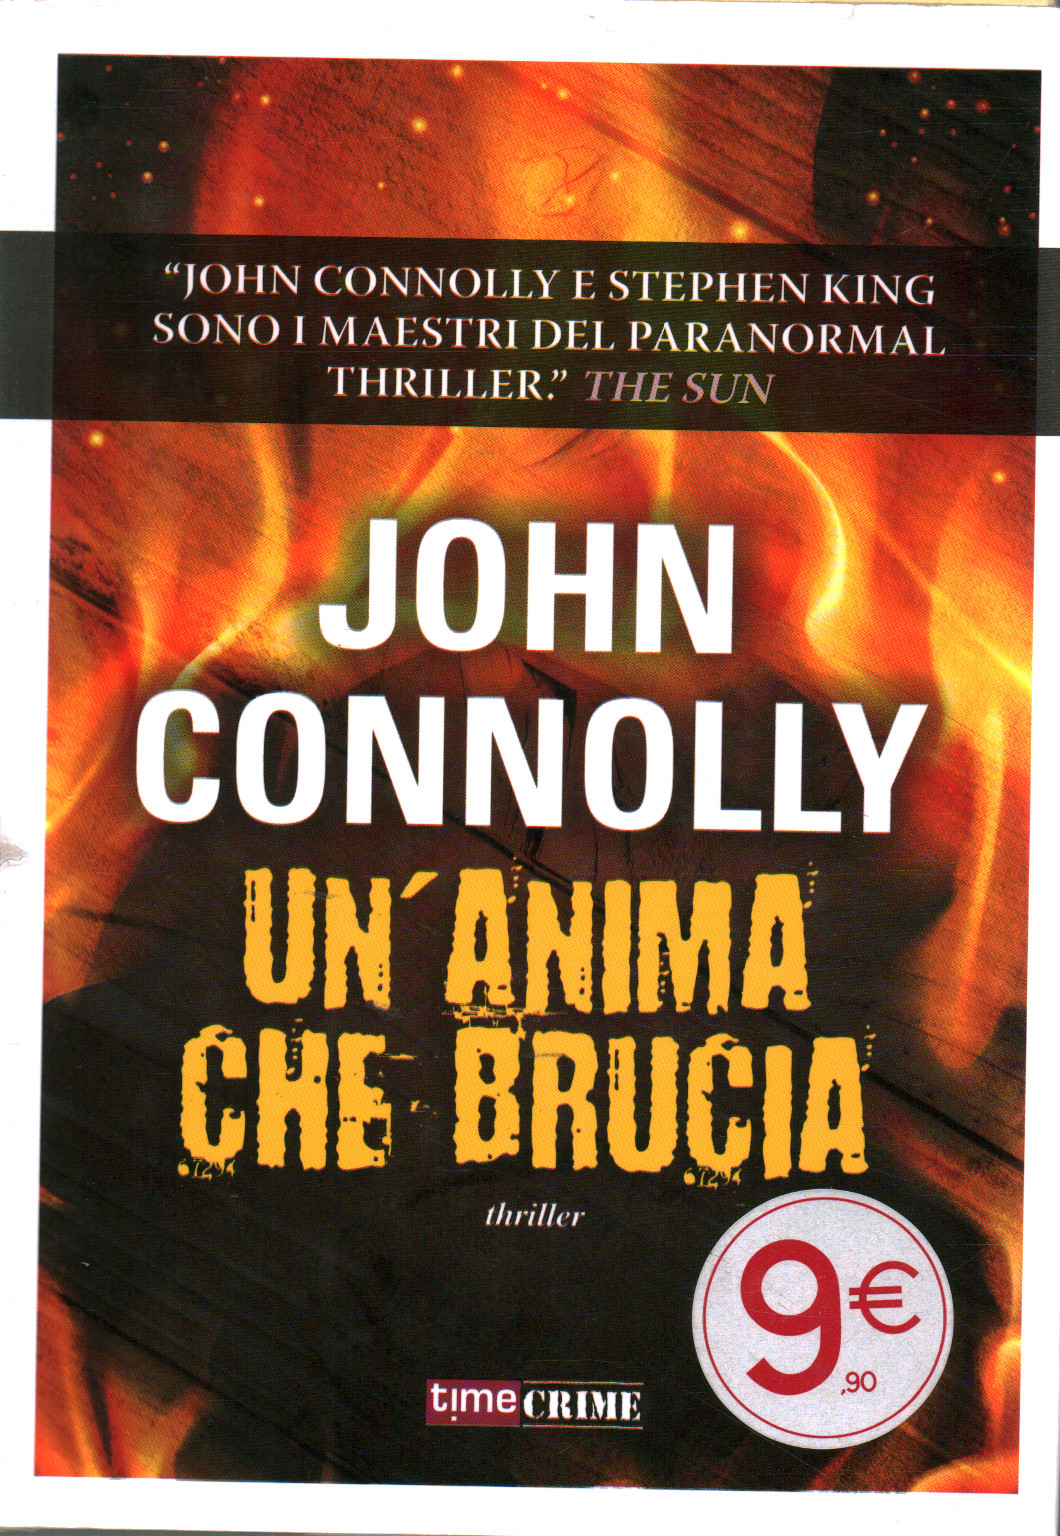 A burning soul, John Connolly